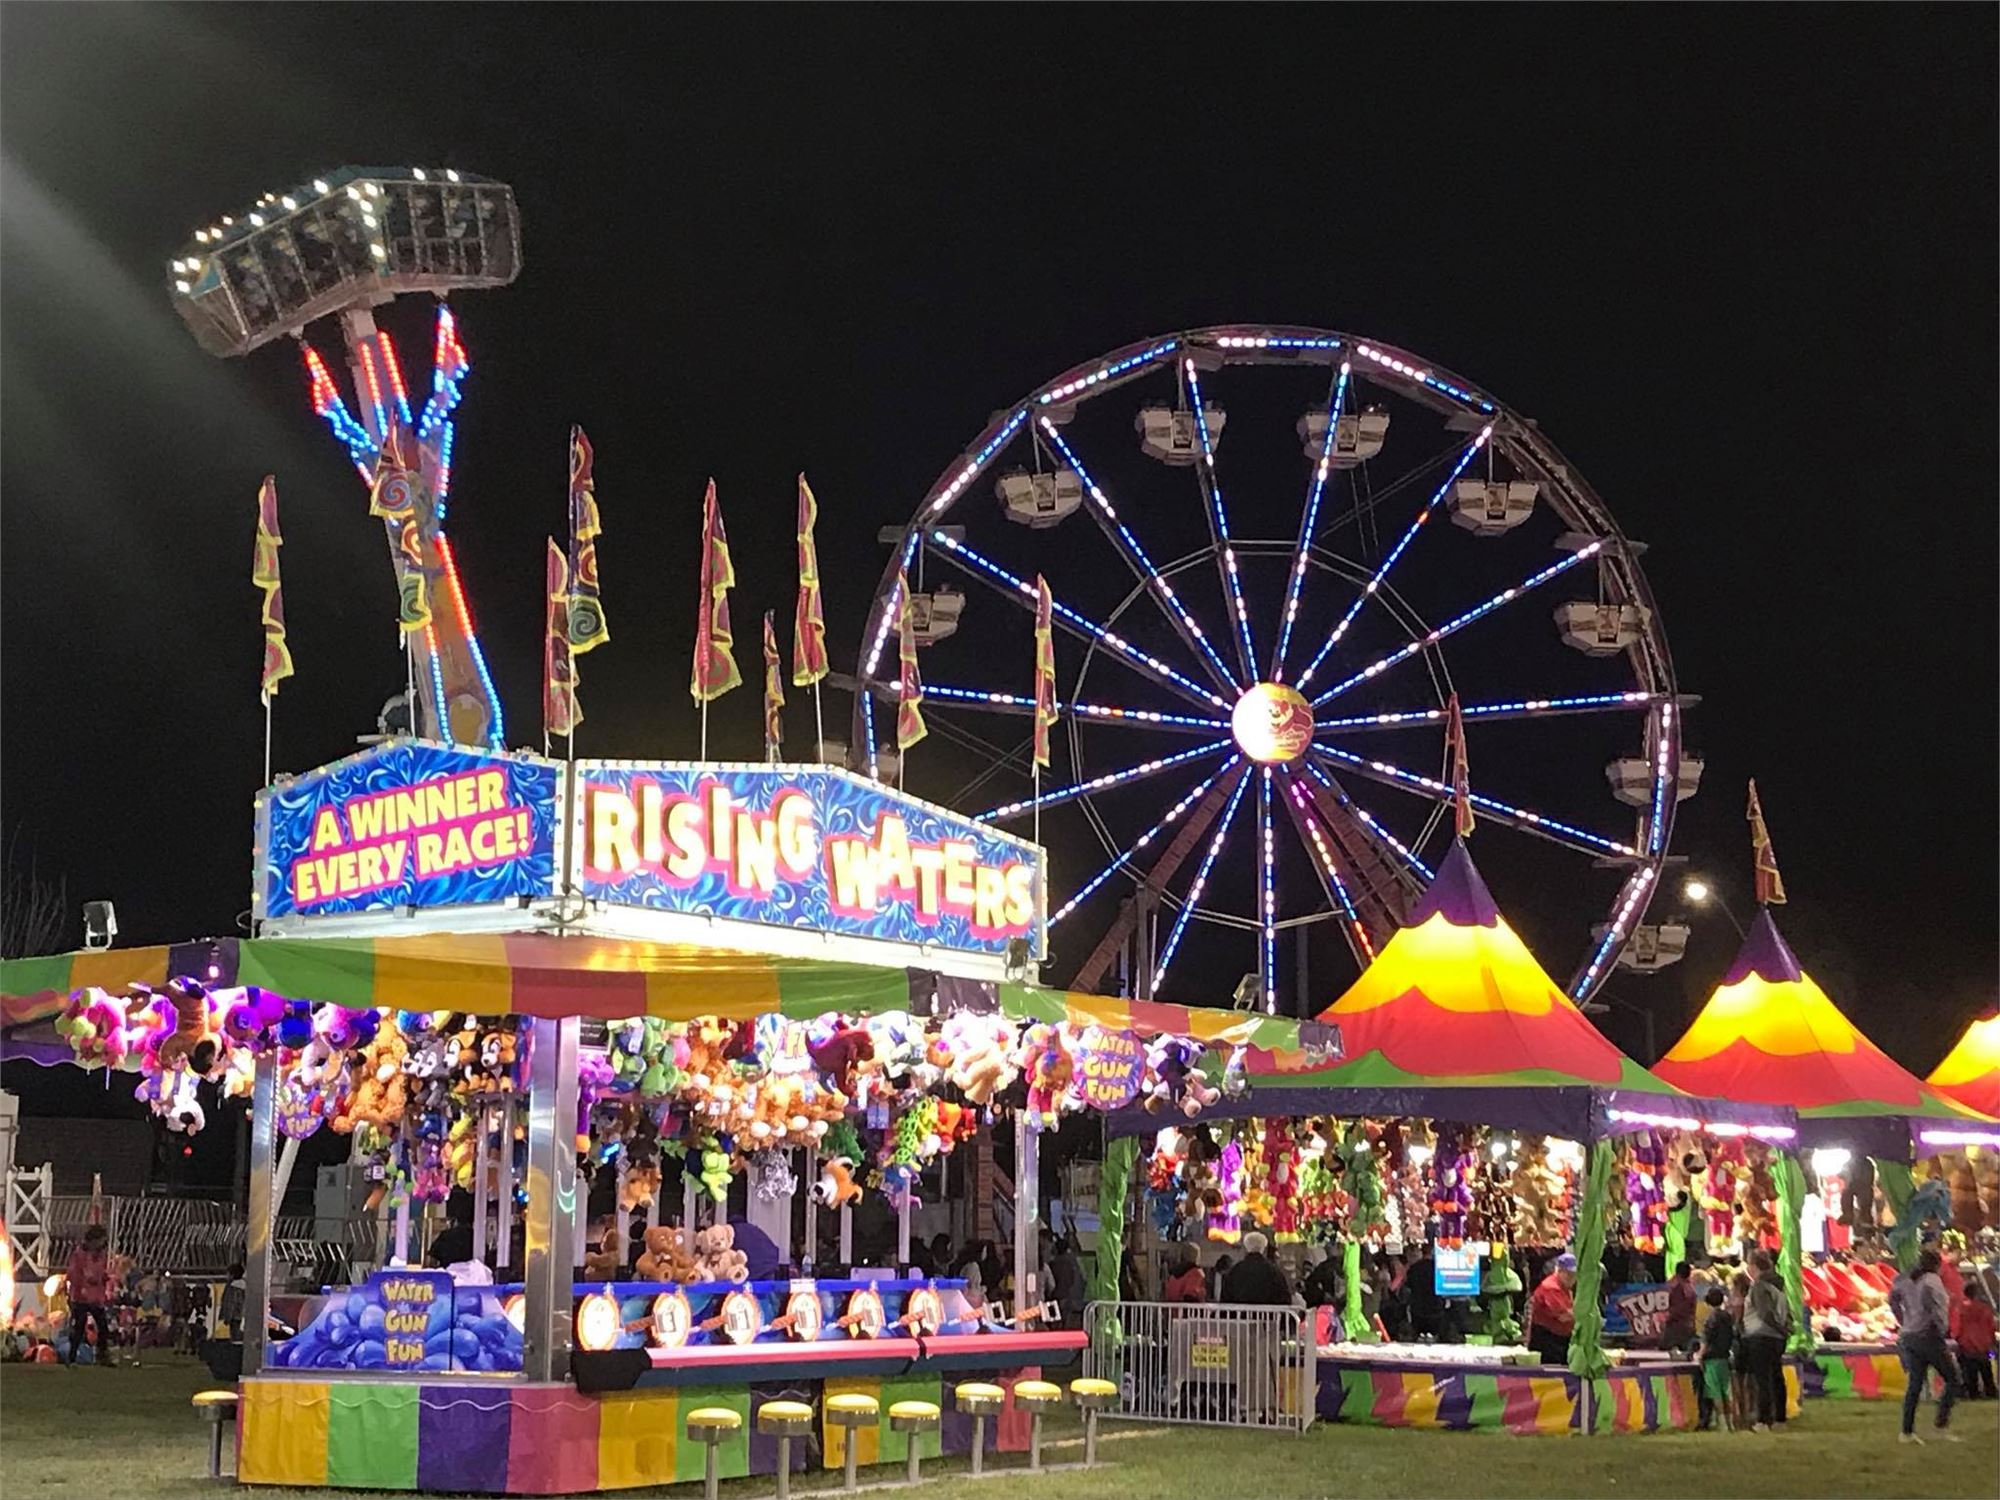 2019 Santa Barbara County Fair